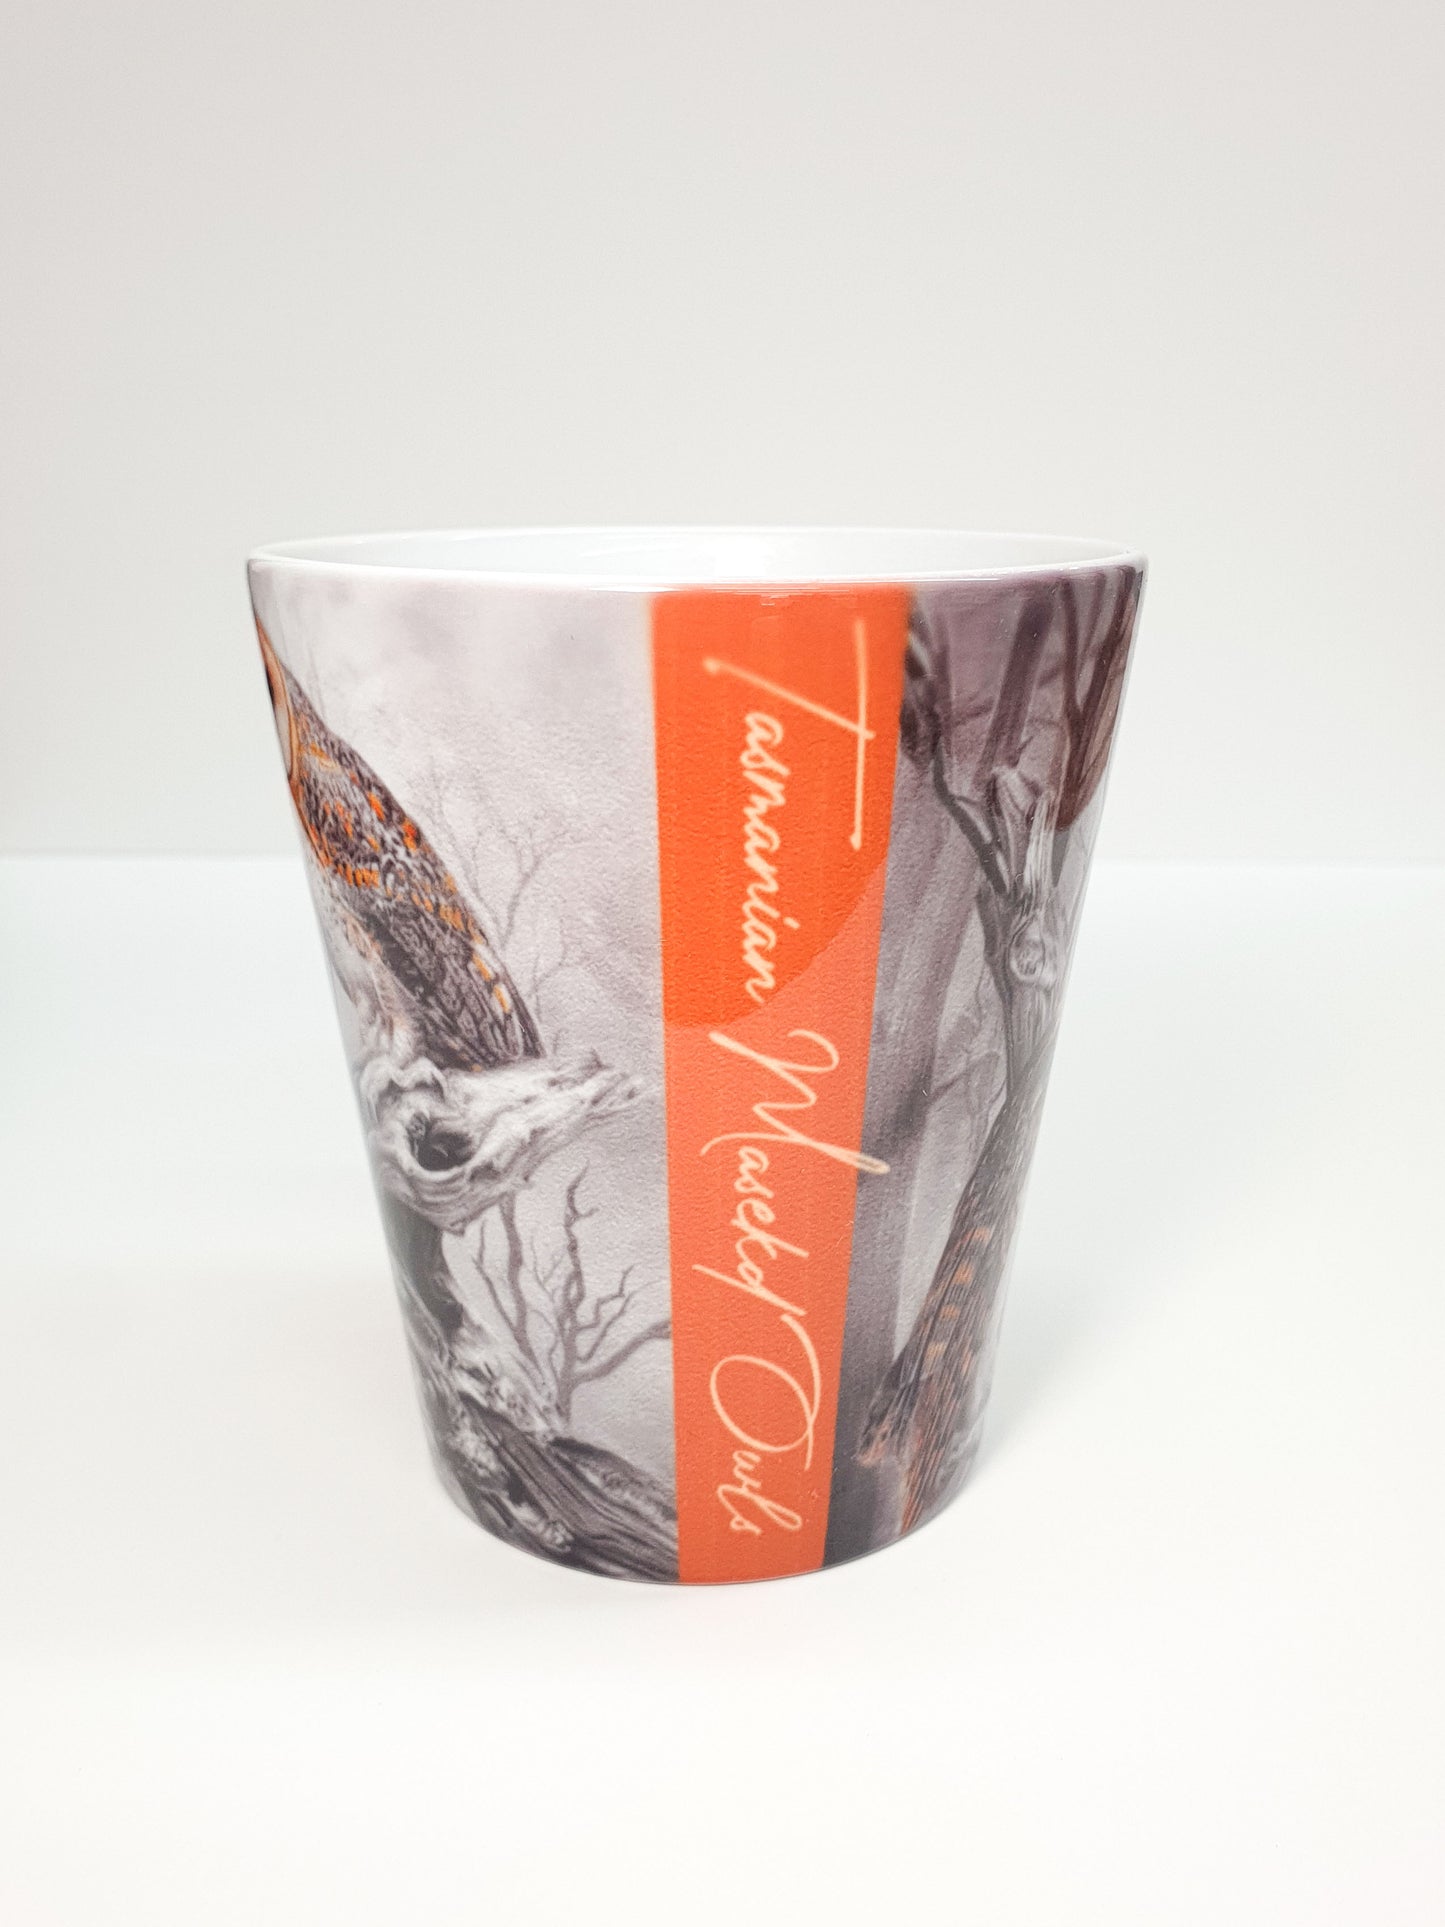 "Tasmanian Masked Owls' ceramic mug